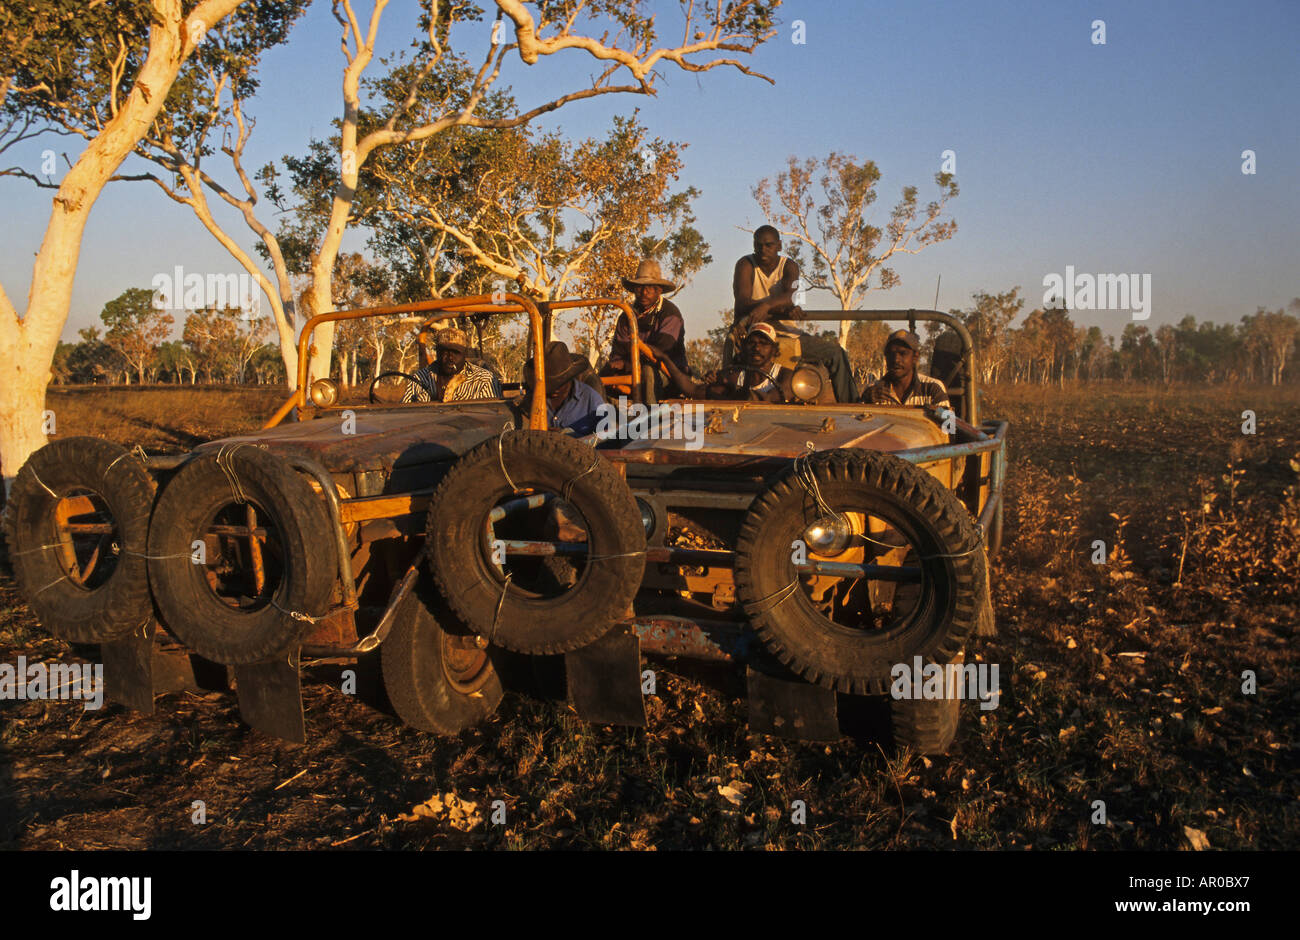 Aboriginal stockmen, Gibb River Station, Kimberle, Australien, West Australien, WA, Outback, North-West, Kimberley, Aboriginal s Stock Photo